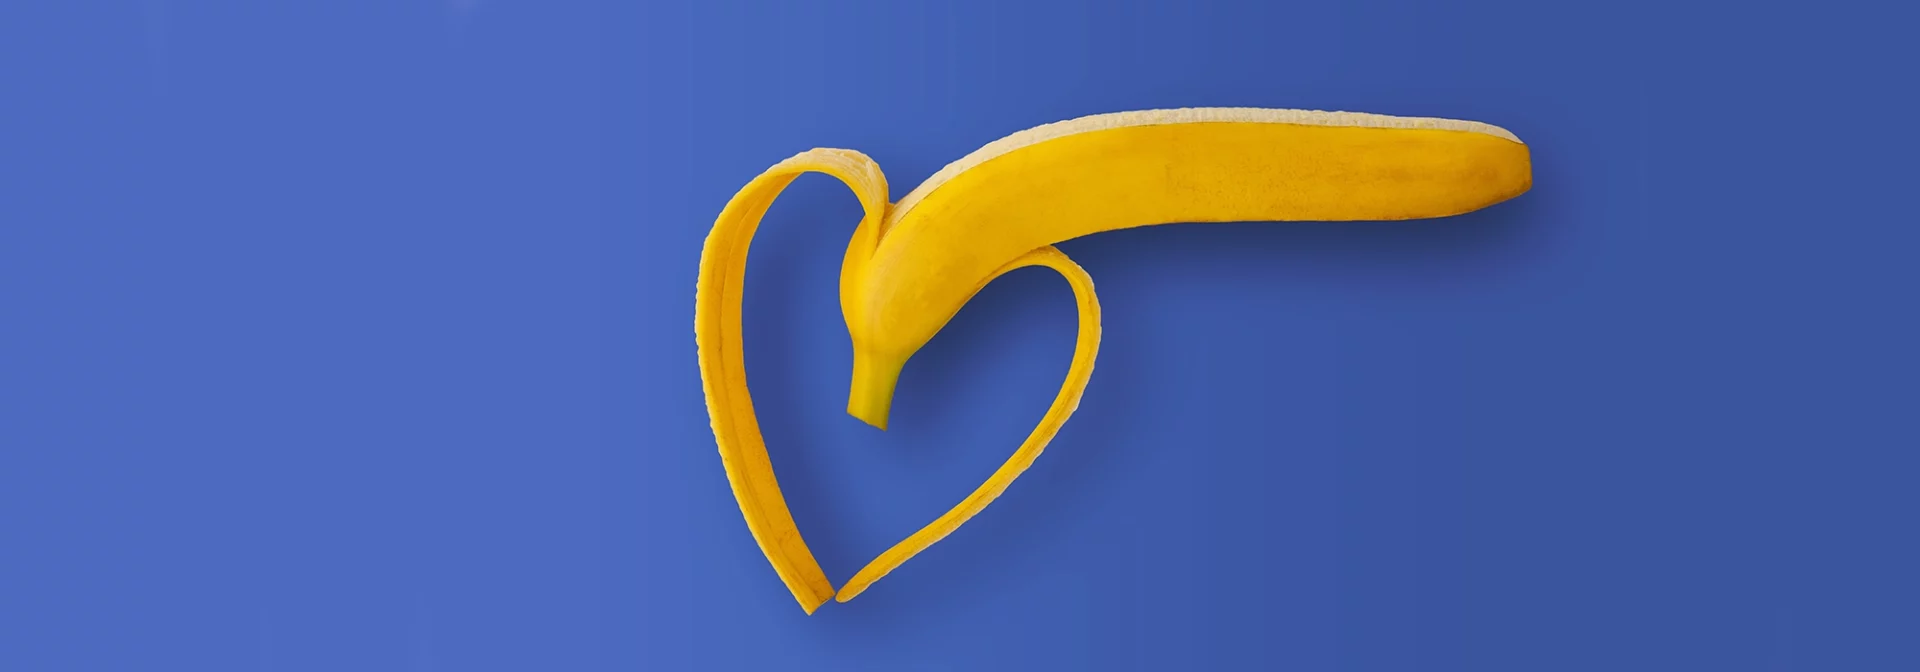 half peeled banana in shape of heart